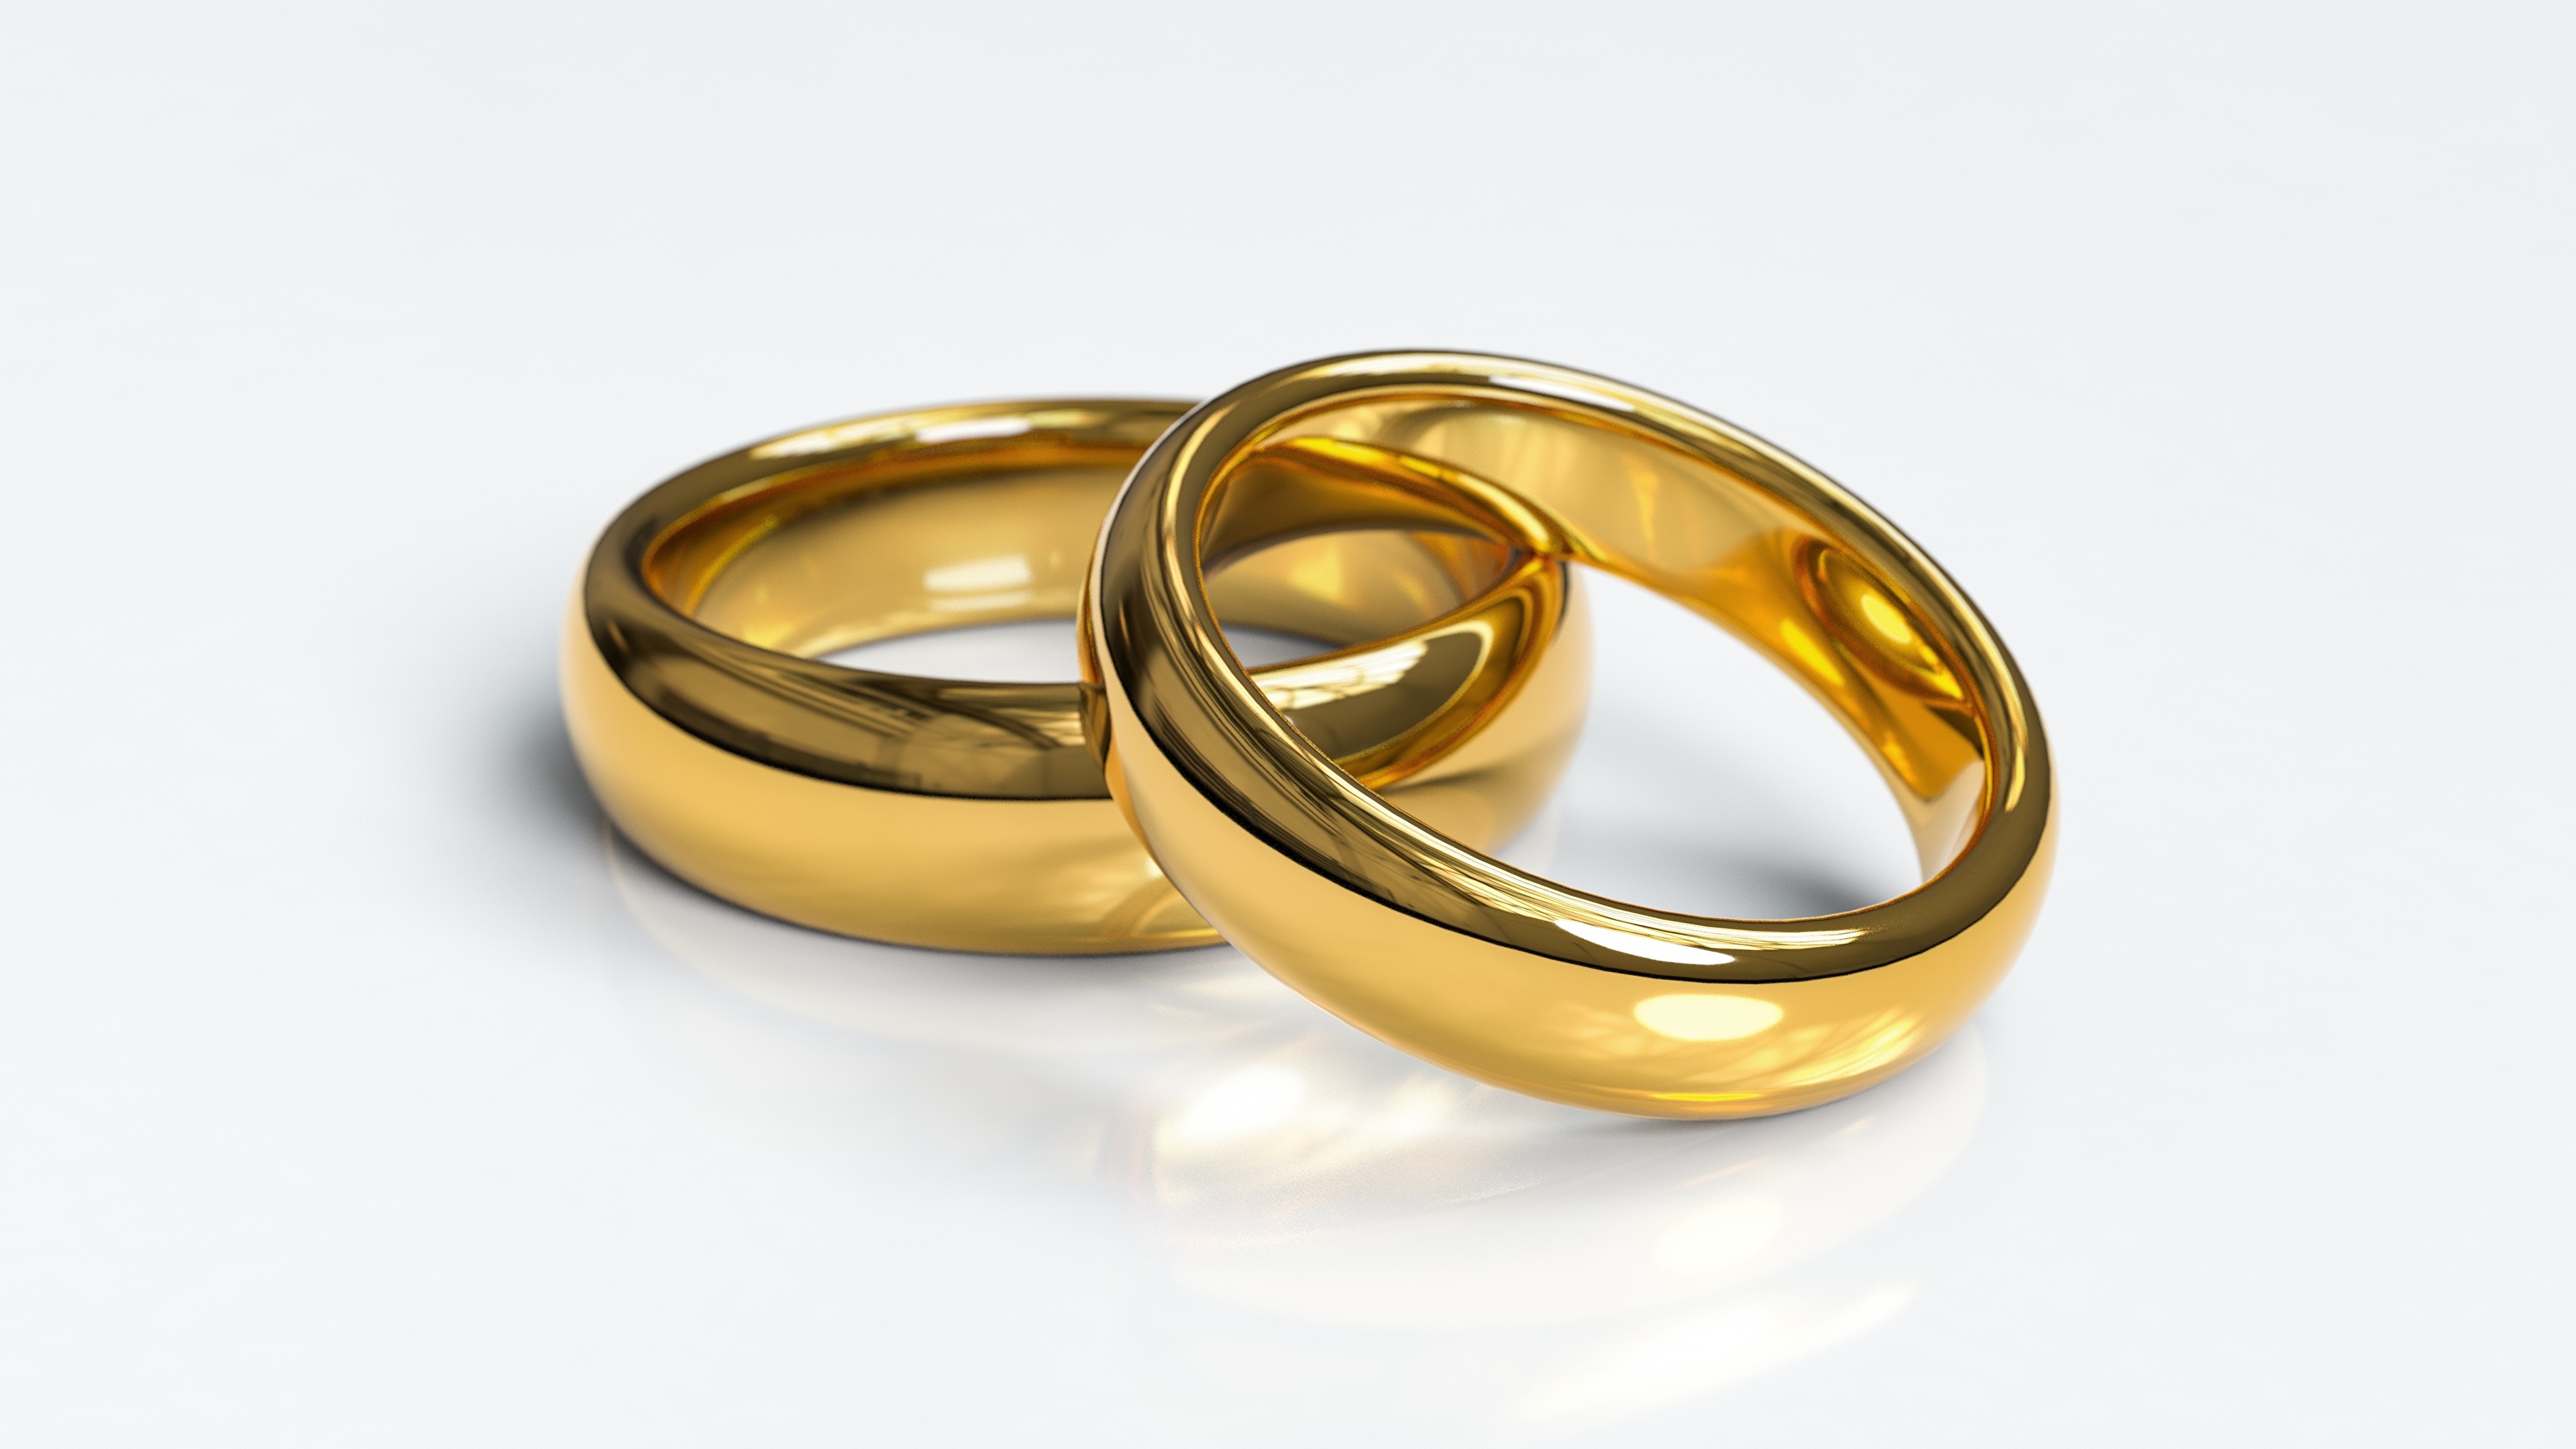 Два кольца свадебные